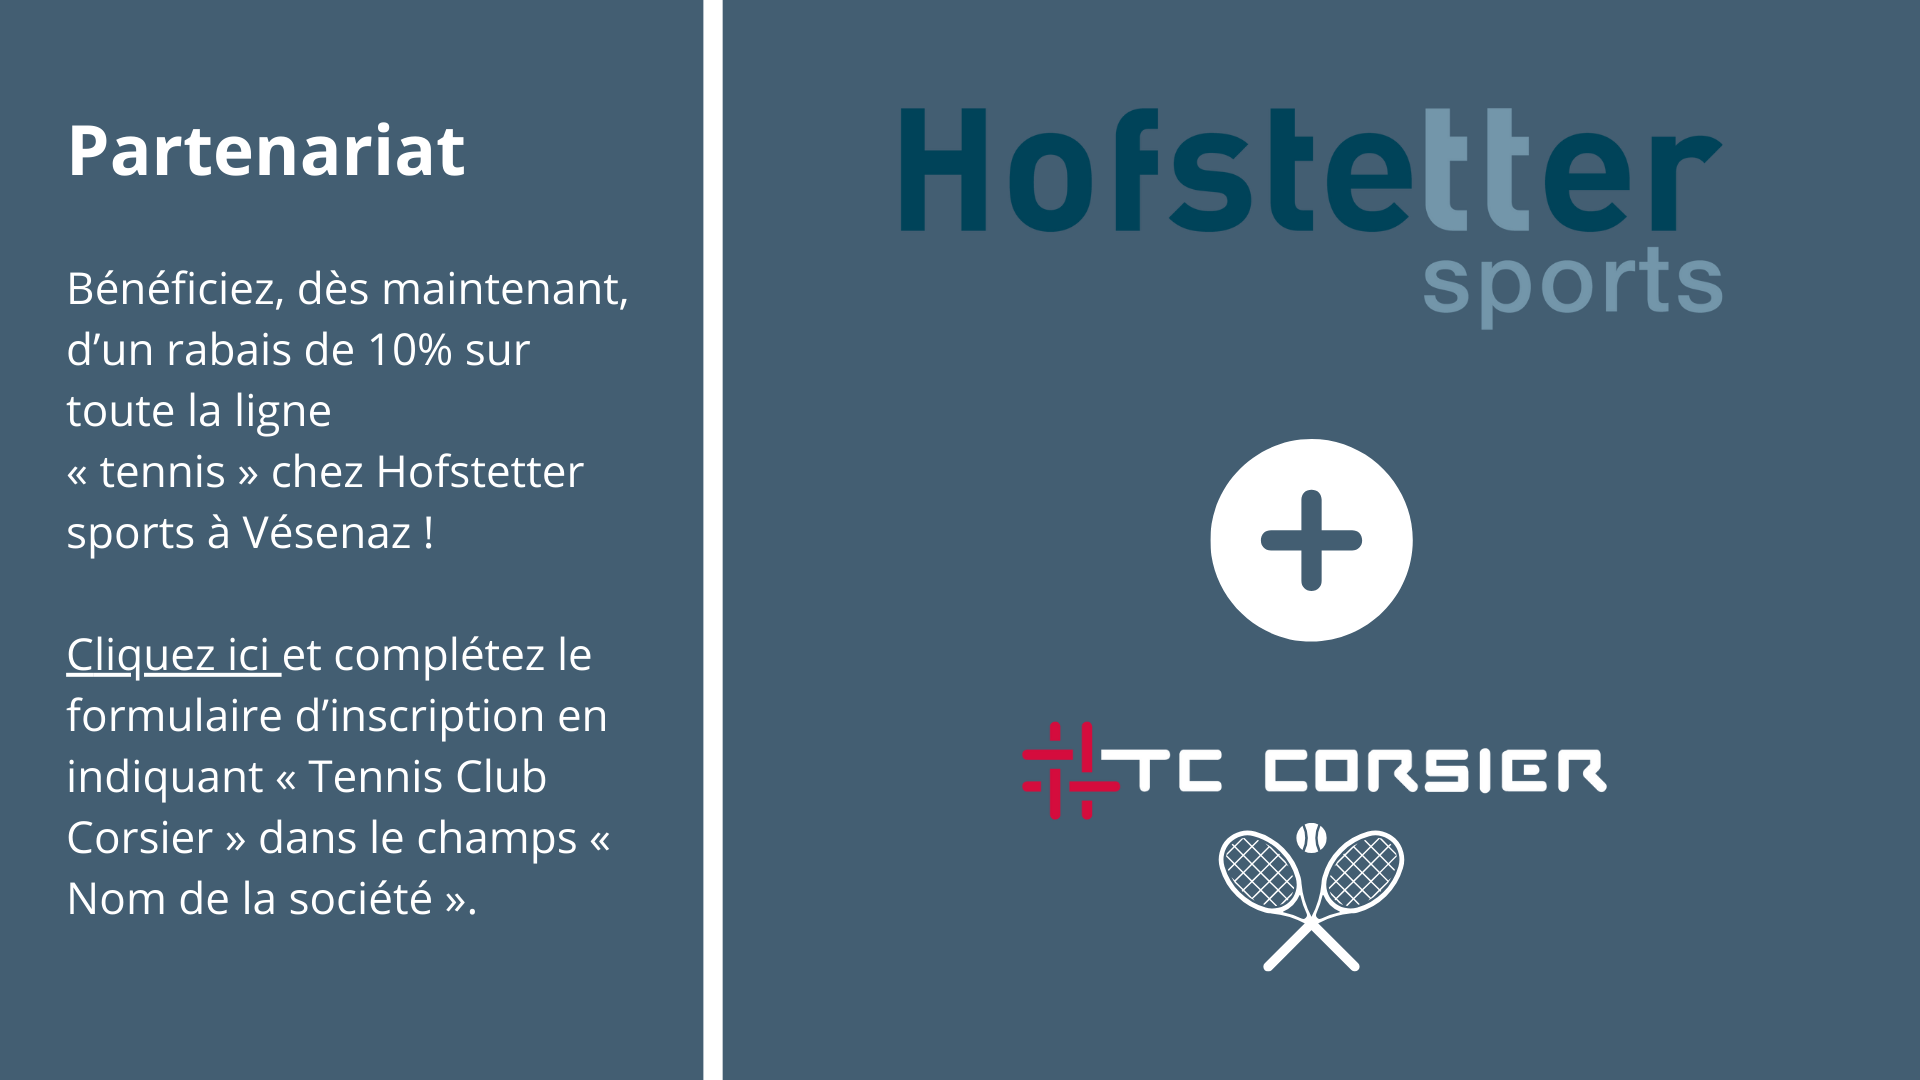 Partenariat Hofstetter sports + TC Corsier